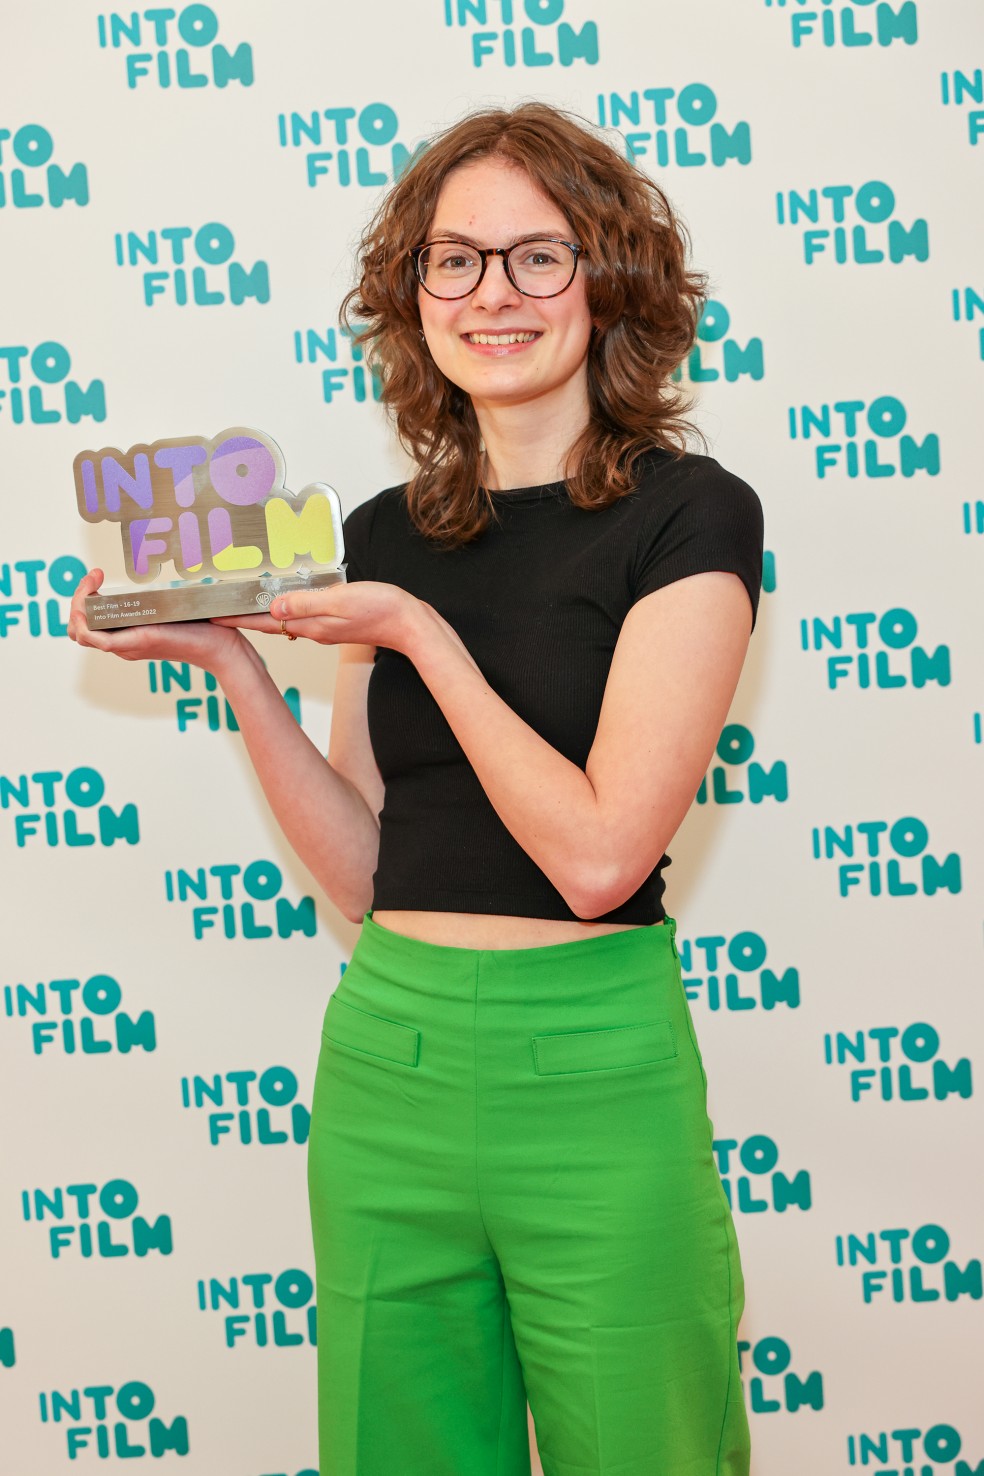 Best Film - 16-19 winner Freya with her award